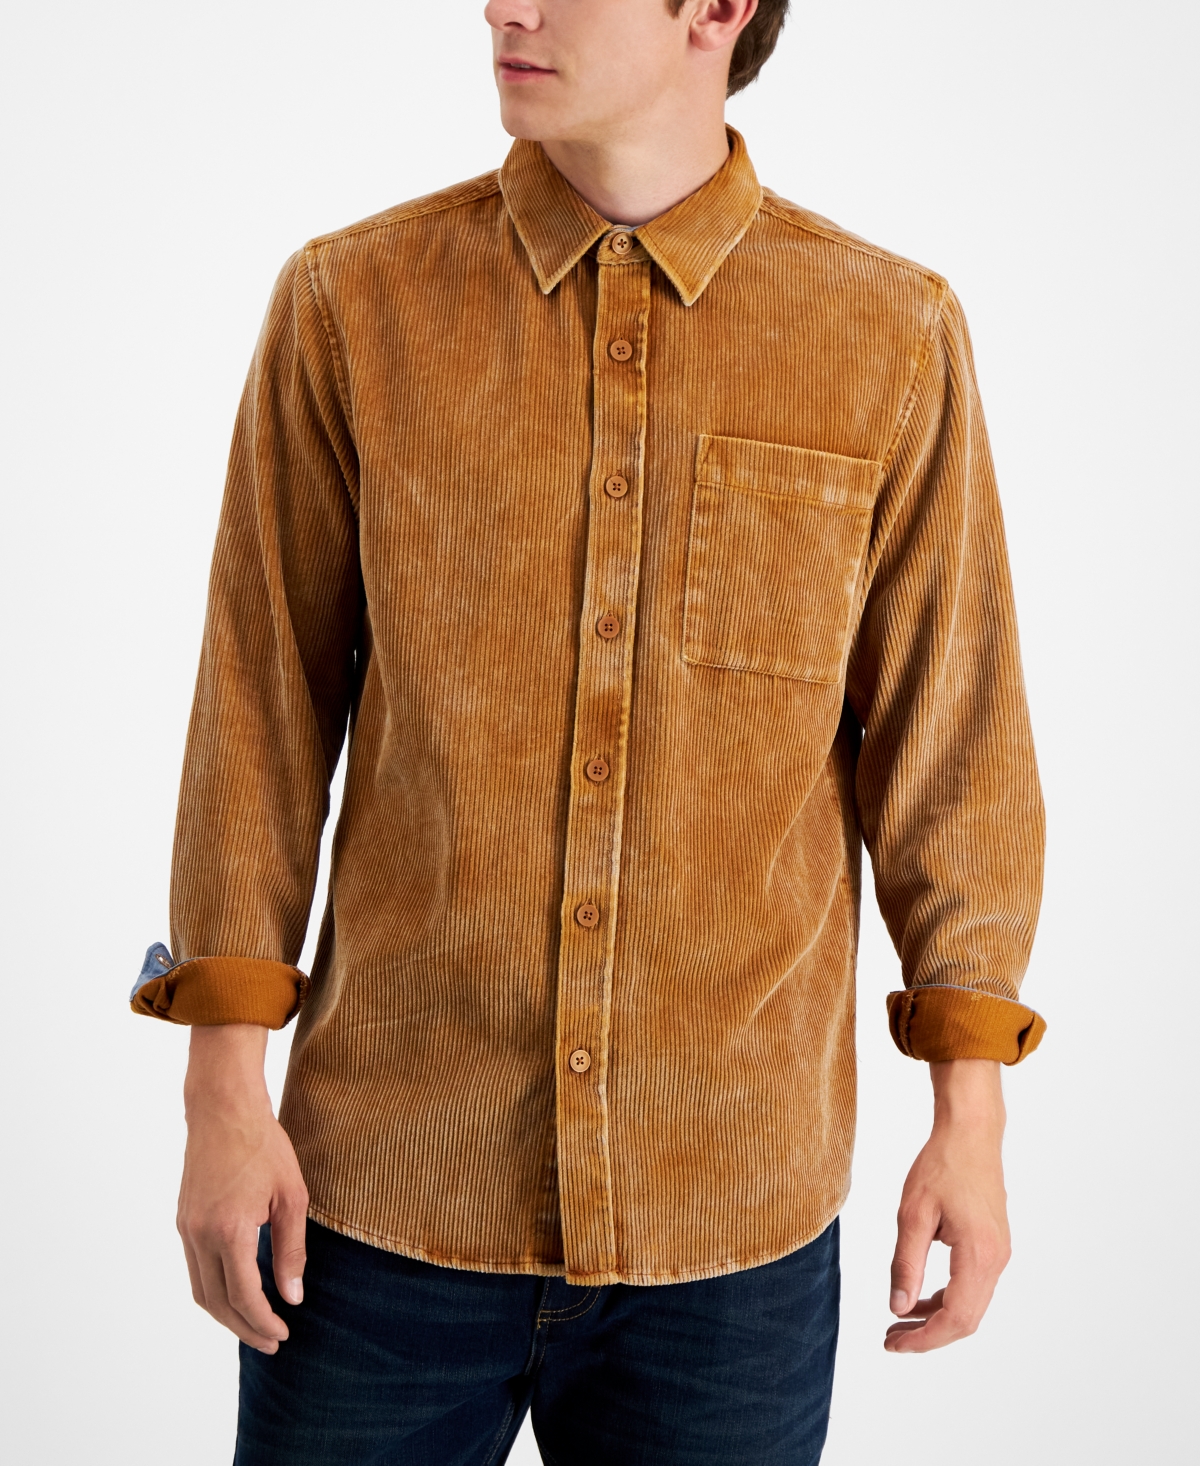 Sun + Stone Men's Corduroy Shirt, Created For Macy's In Artichoke